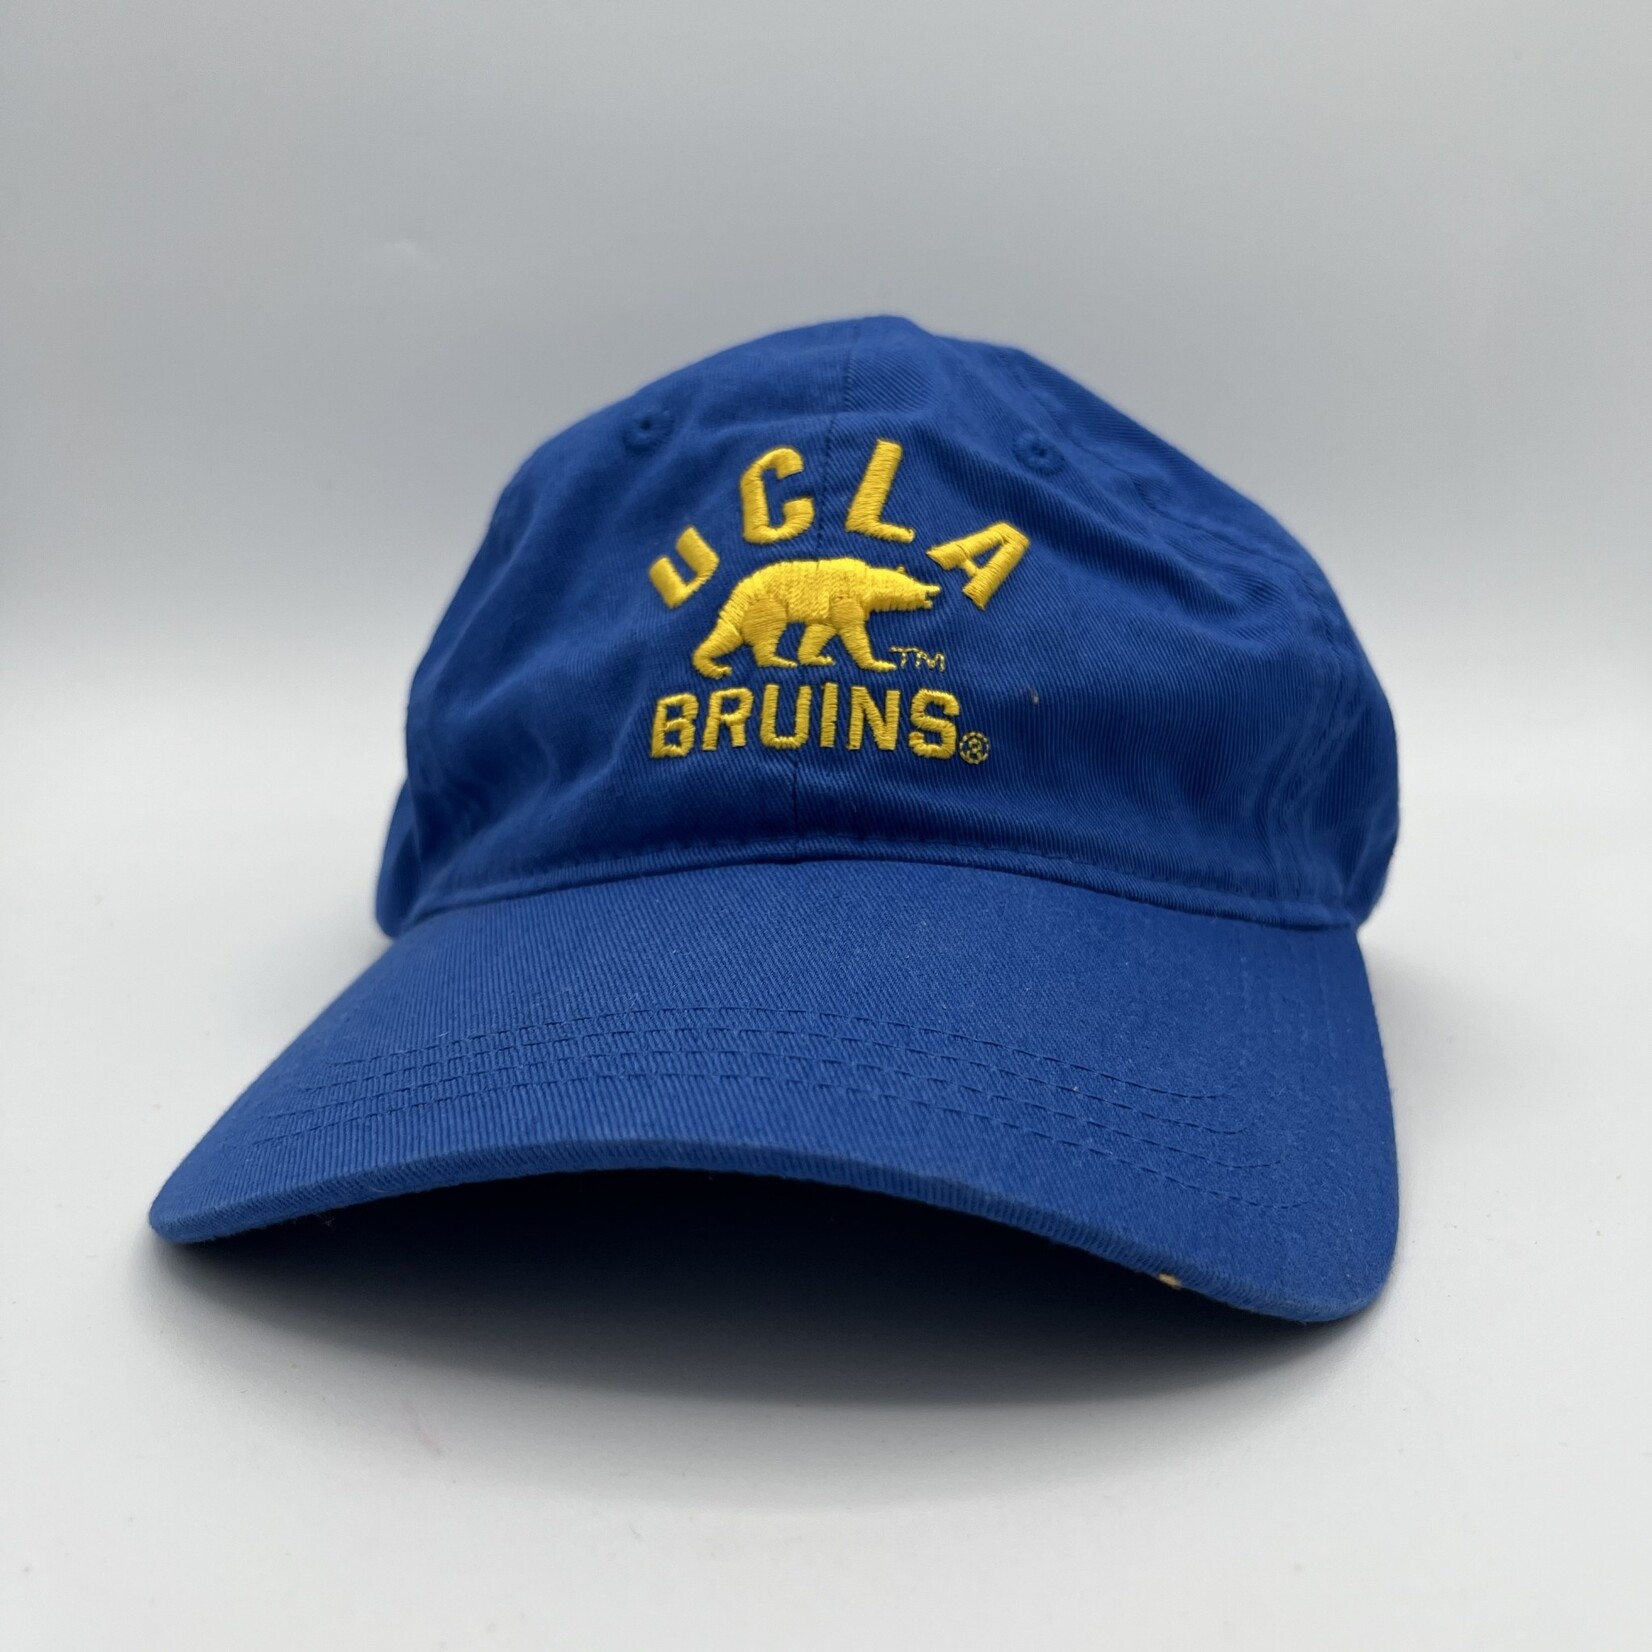 Mission Zero UCLA Bruins Hat